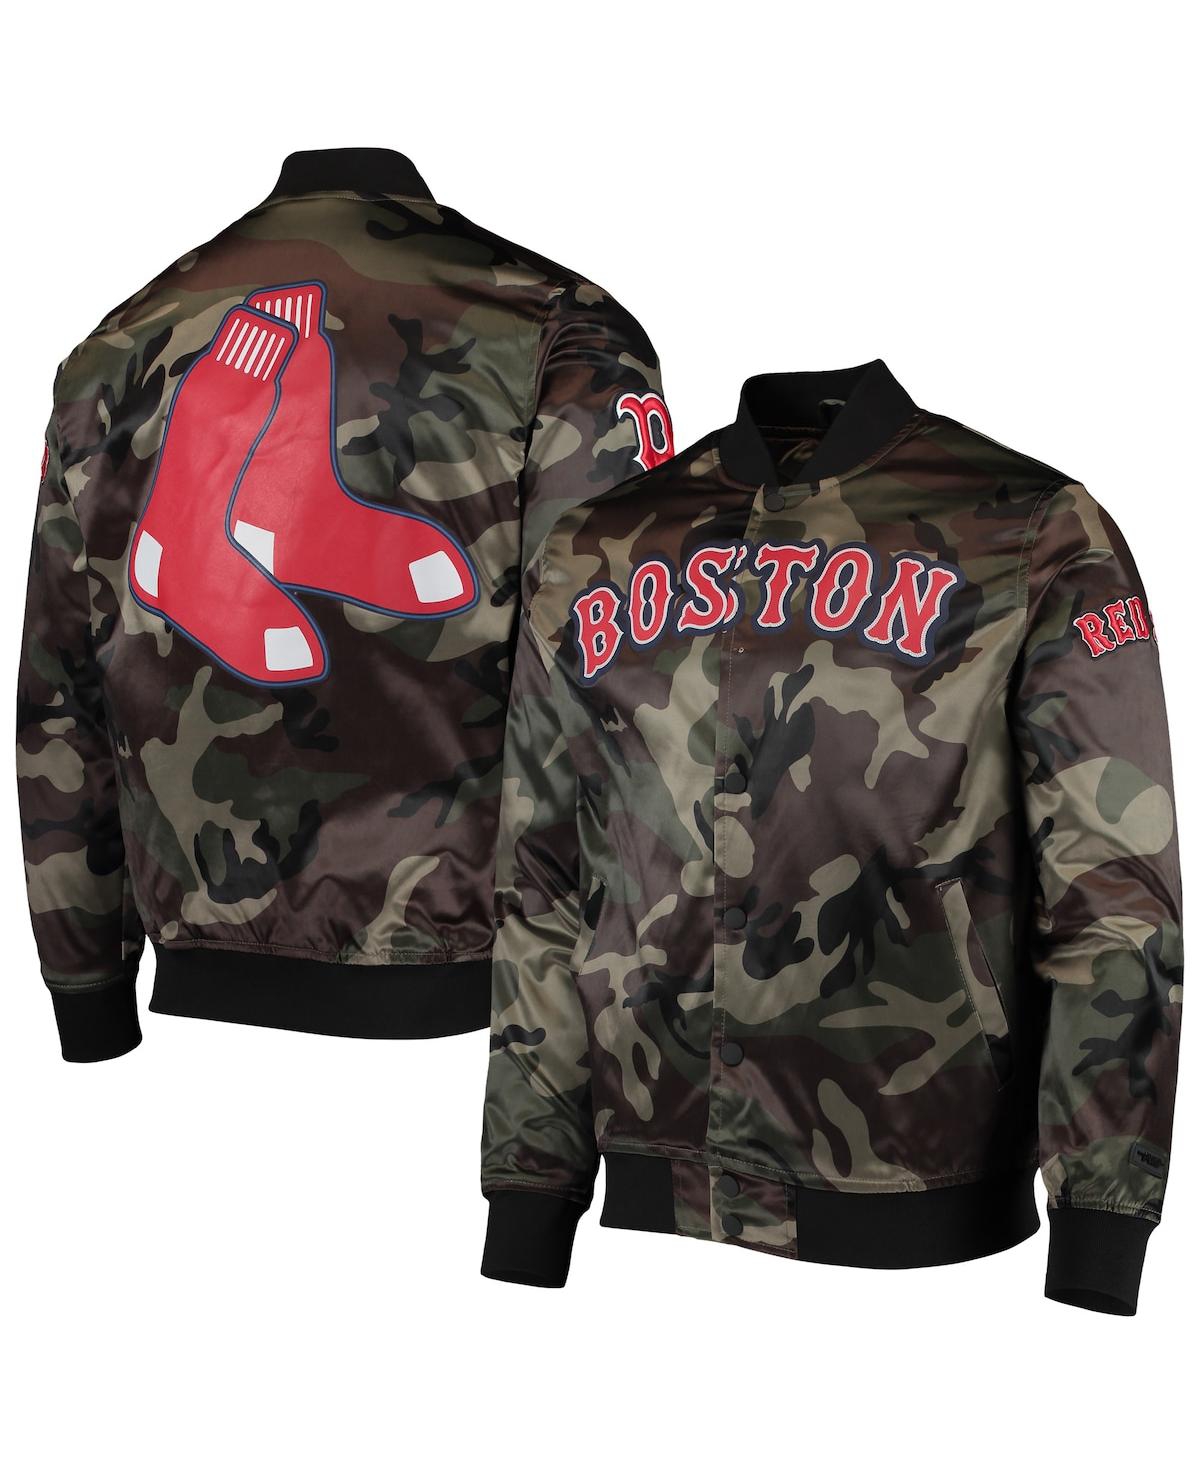 Shop Pro Standard Men's  Camo Boston Red Sox Satin Full-snap Jacket